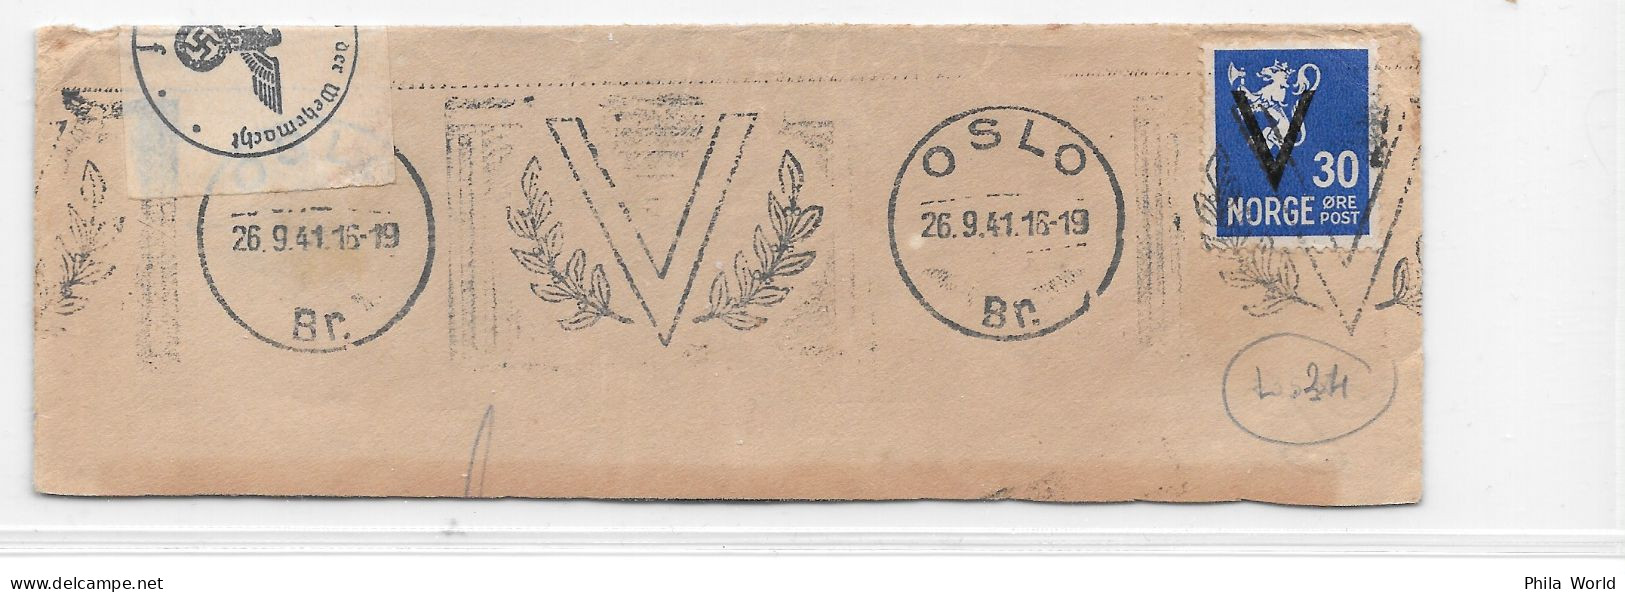 WW2 NORGE NORVEGE NORWAY 1941 Fragment Devant Lettre Oslo V Overprint Surcharge 30 C LION + Cancel Germany Censorship - Lettres & Documents